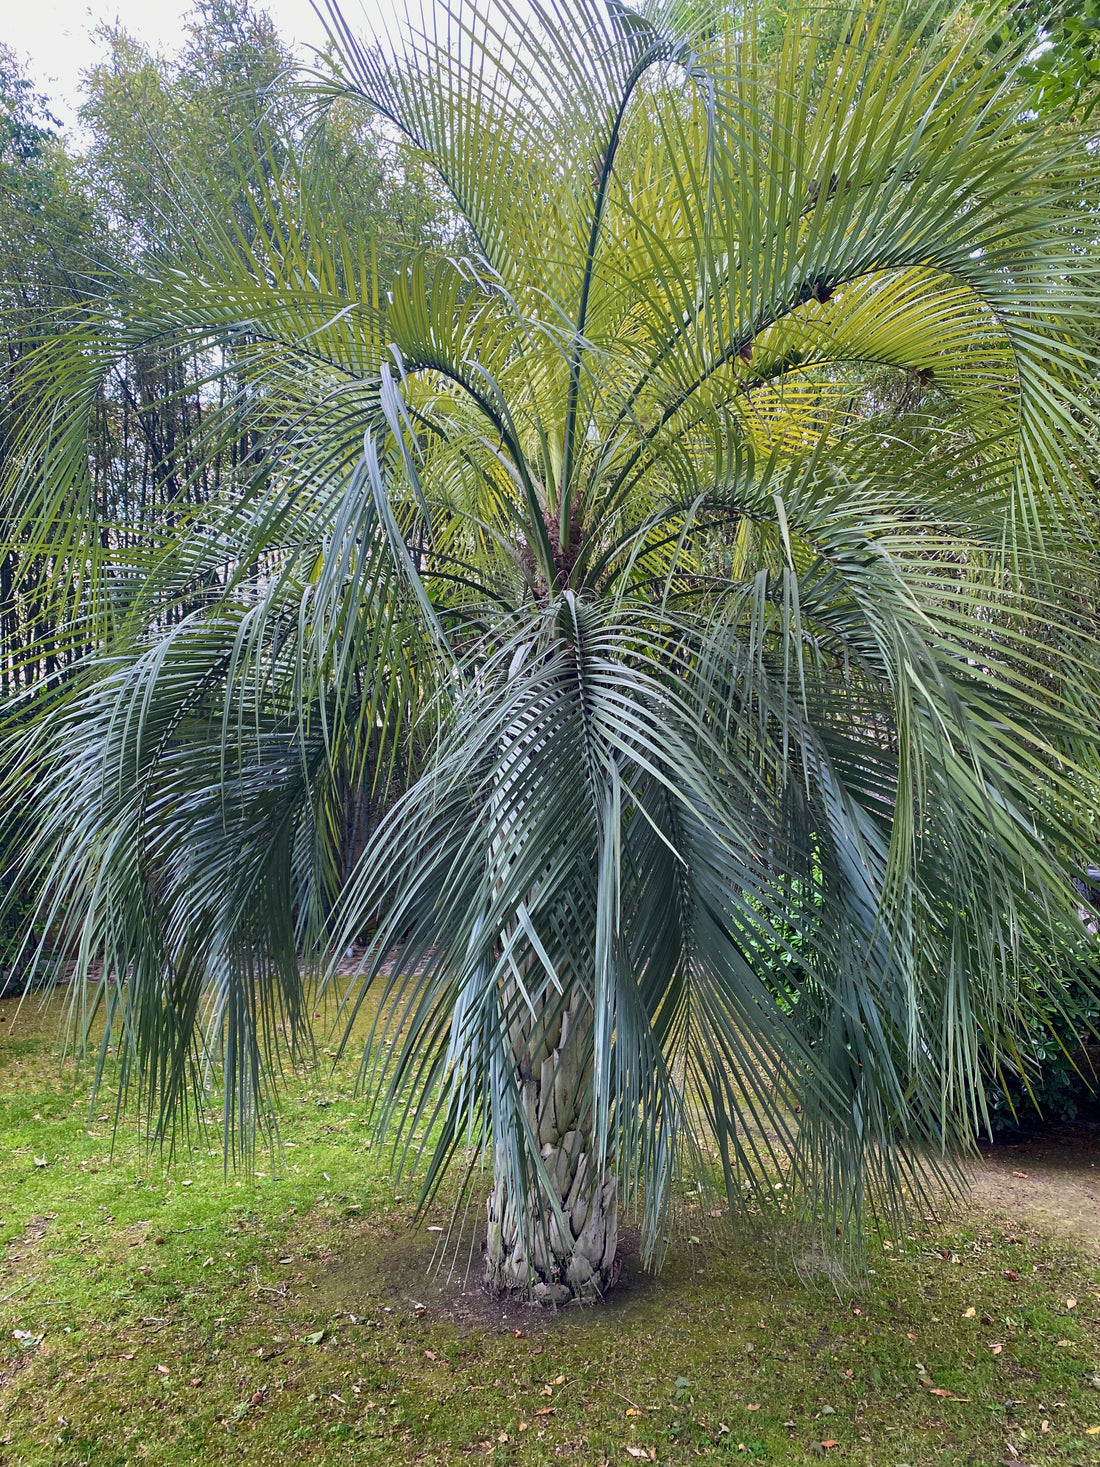 Pindo Palm, Jelly Palm, Cocos Australis